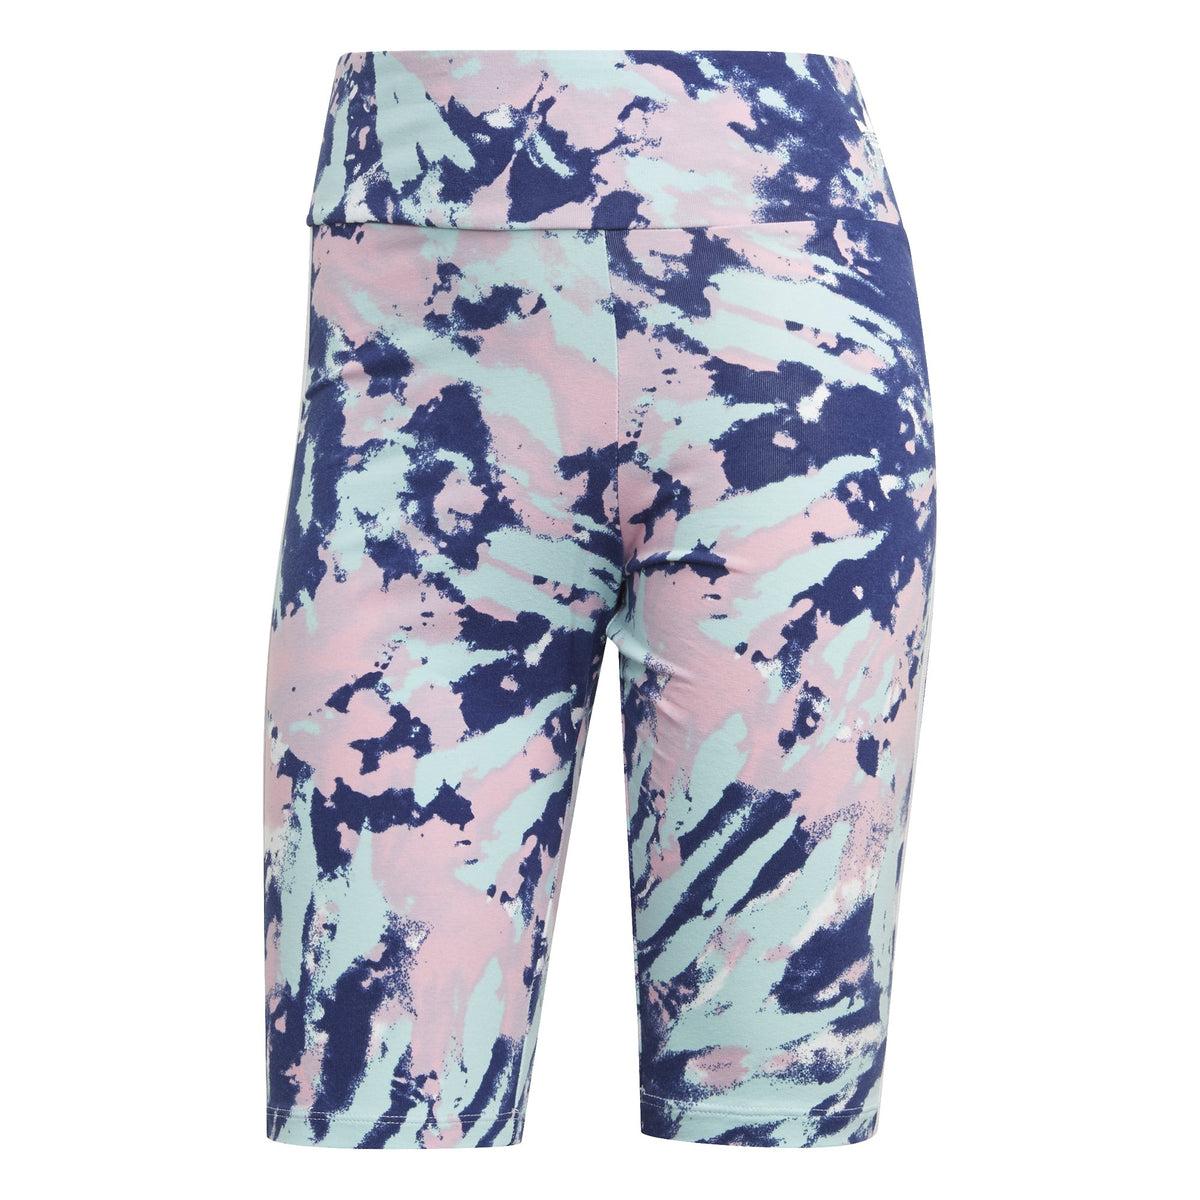 Adidas Originals Short Tight Tie Dye Vapour Blue Pink Women GL6350 - SHORTS - Erlebniswelt-fliegenfischenShops - Canada